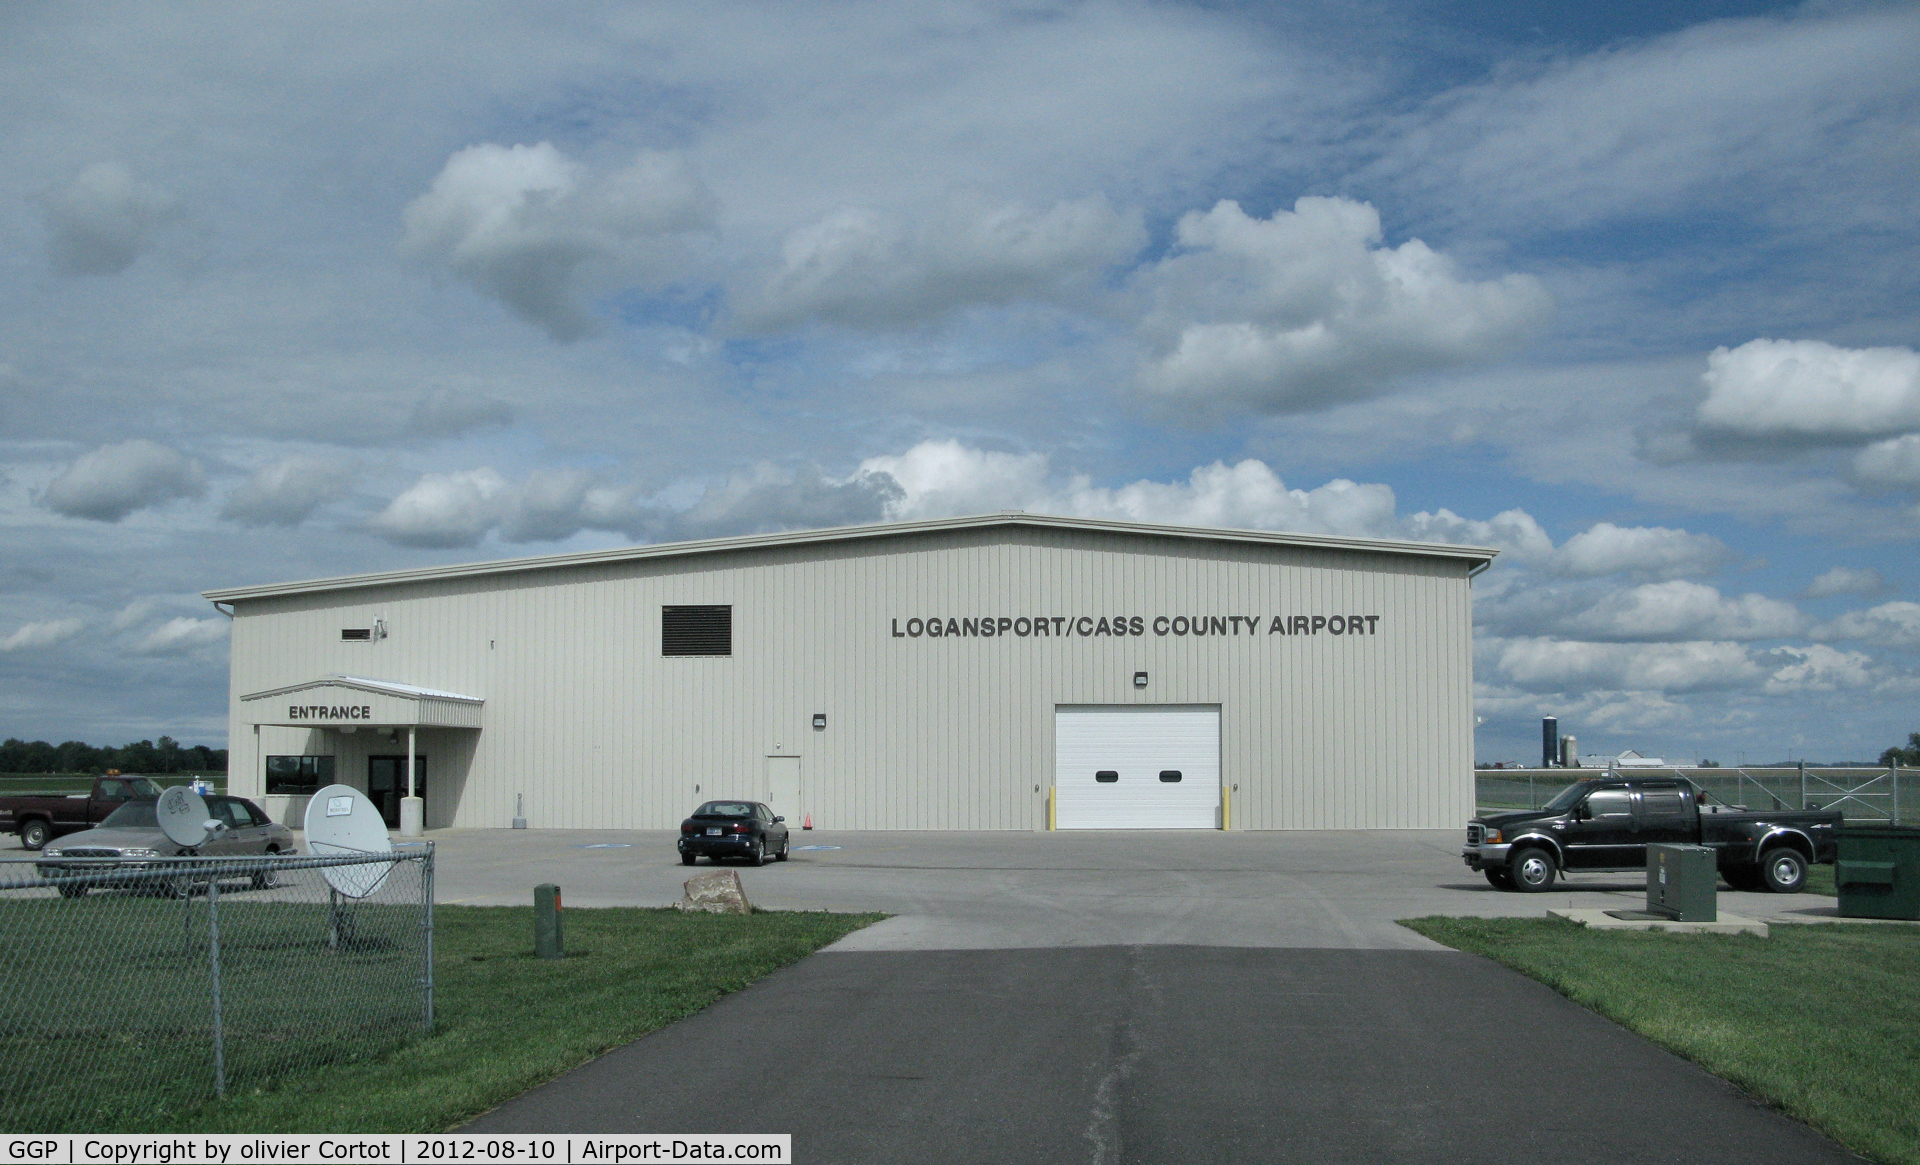 Logansport/cass County Airport (GGP) - main building